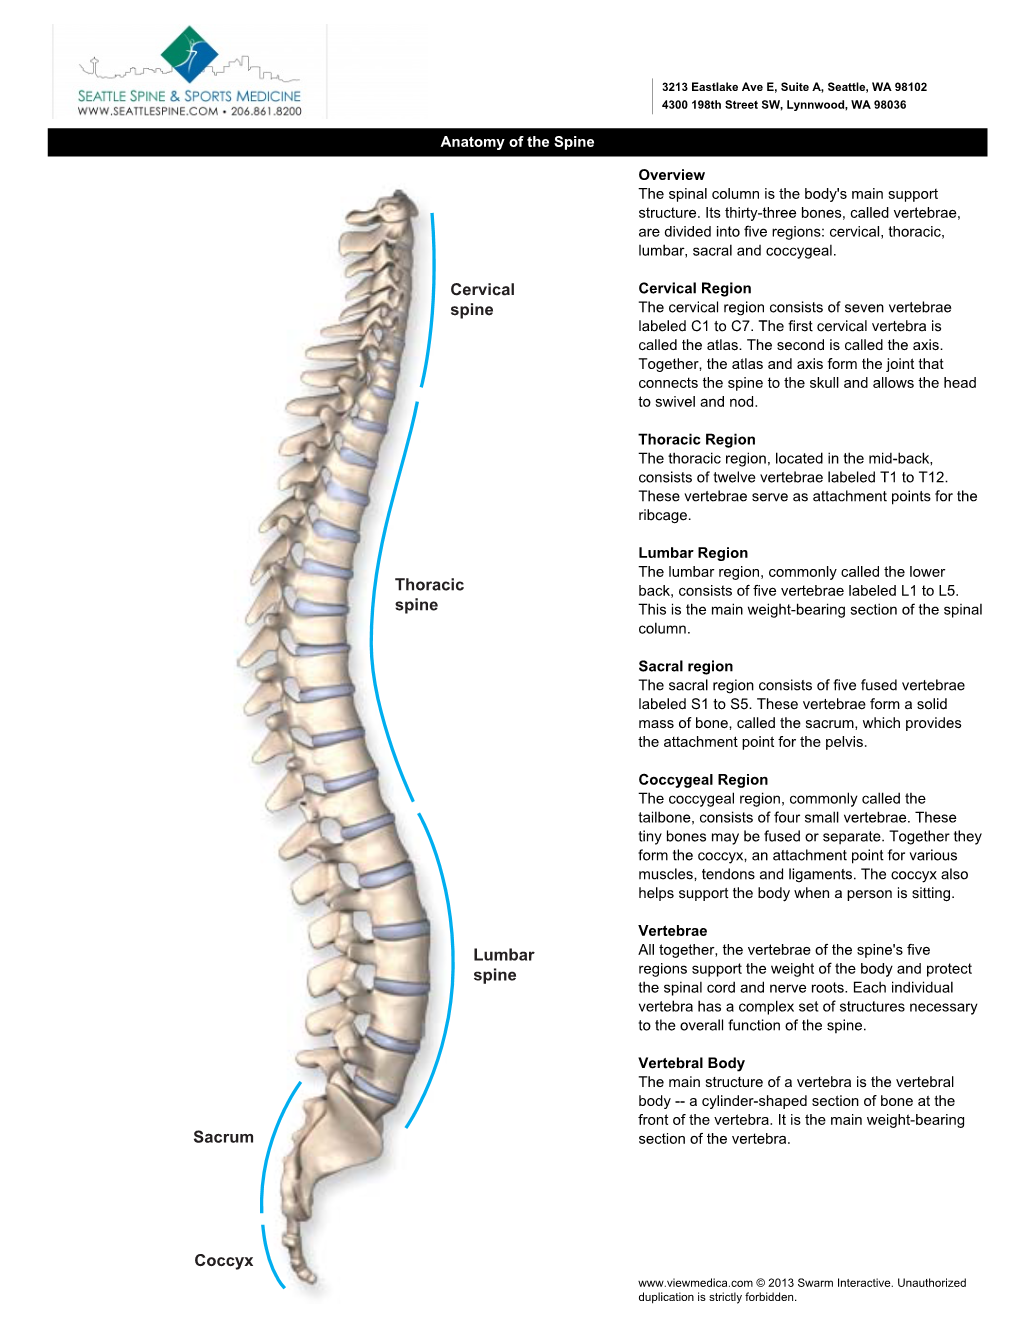 Cervical Spine Thoracic Spine Lumbar Spine Sacrum Coccyx